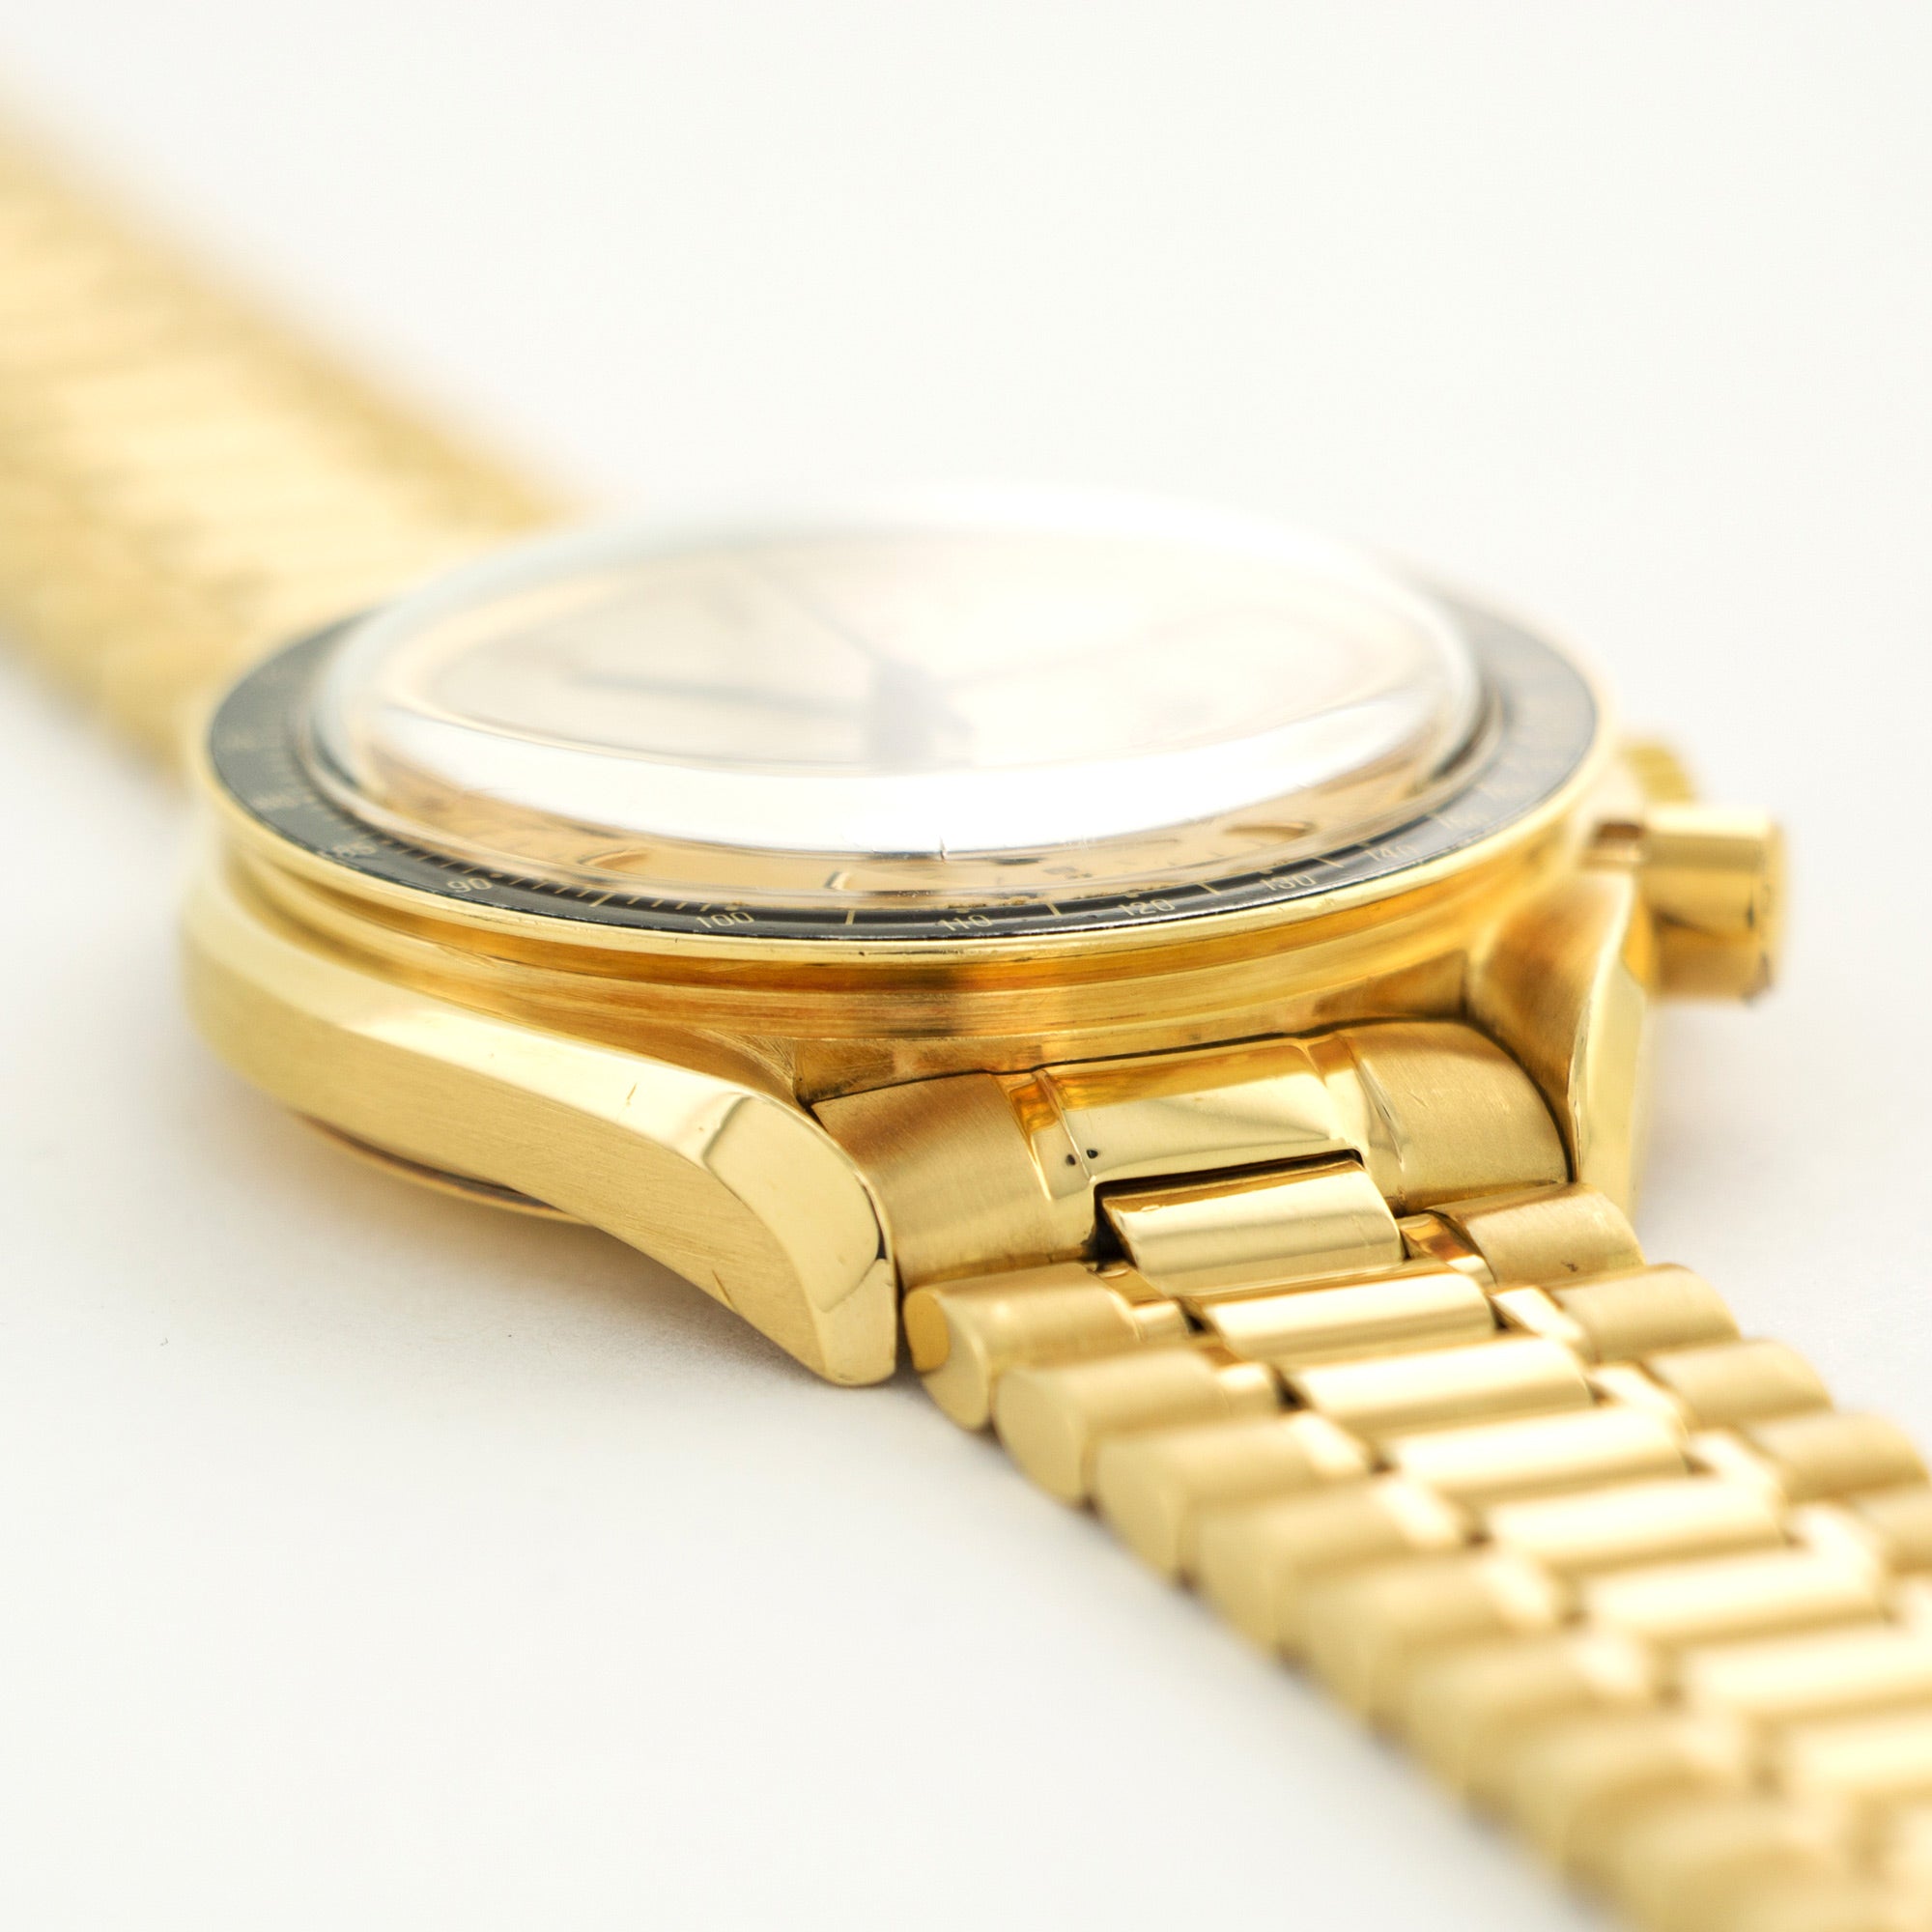 Omega - Omega Speedmaster Yellow Gold Chronograph, ref. 1750032 - The Keystone Watches